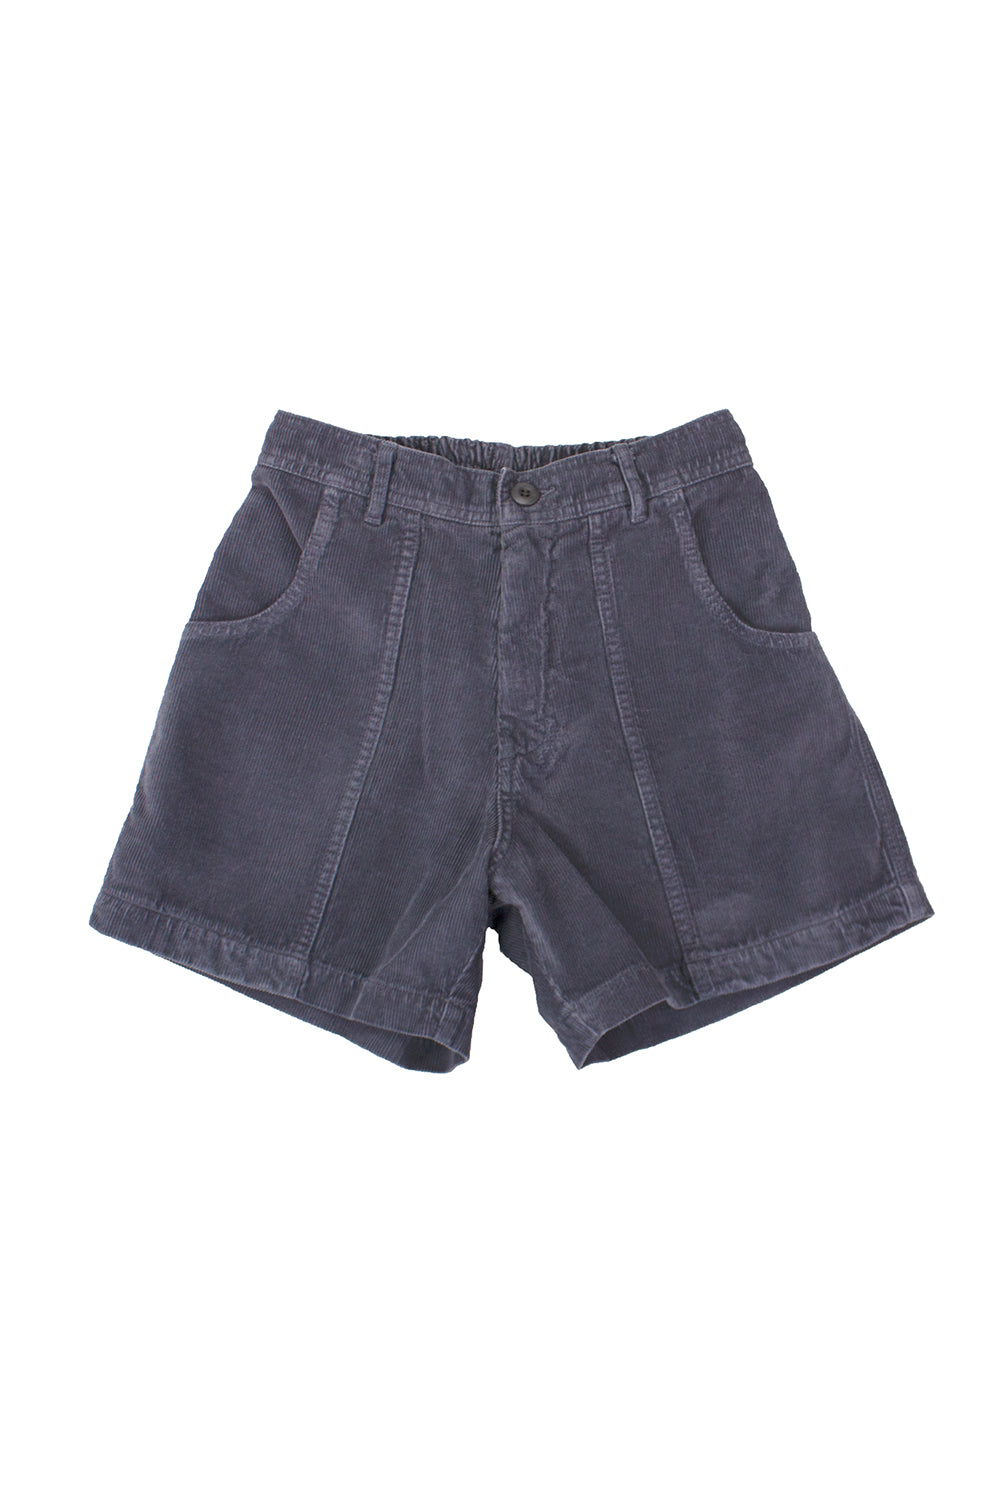 Cabuya Cord Short | Jungmaven Hemp Clothing & Accessories / Color: Diesel Gray